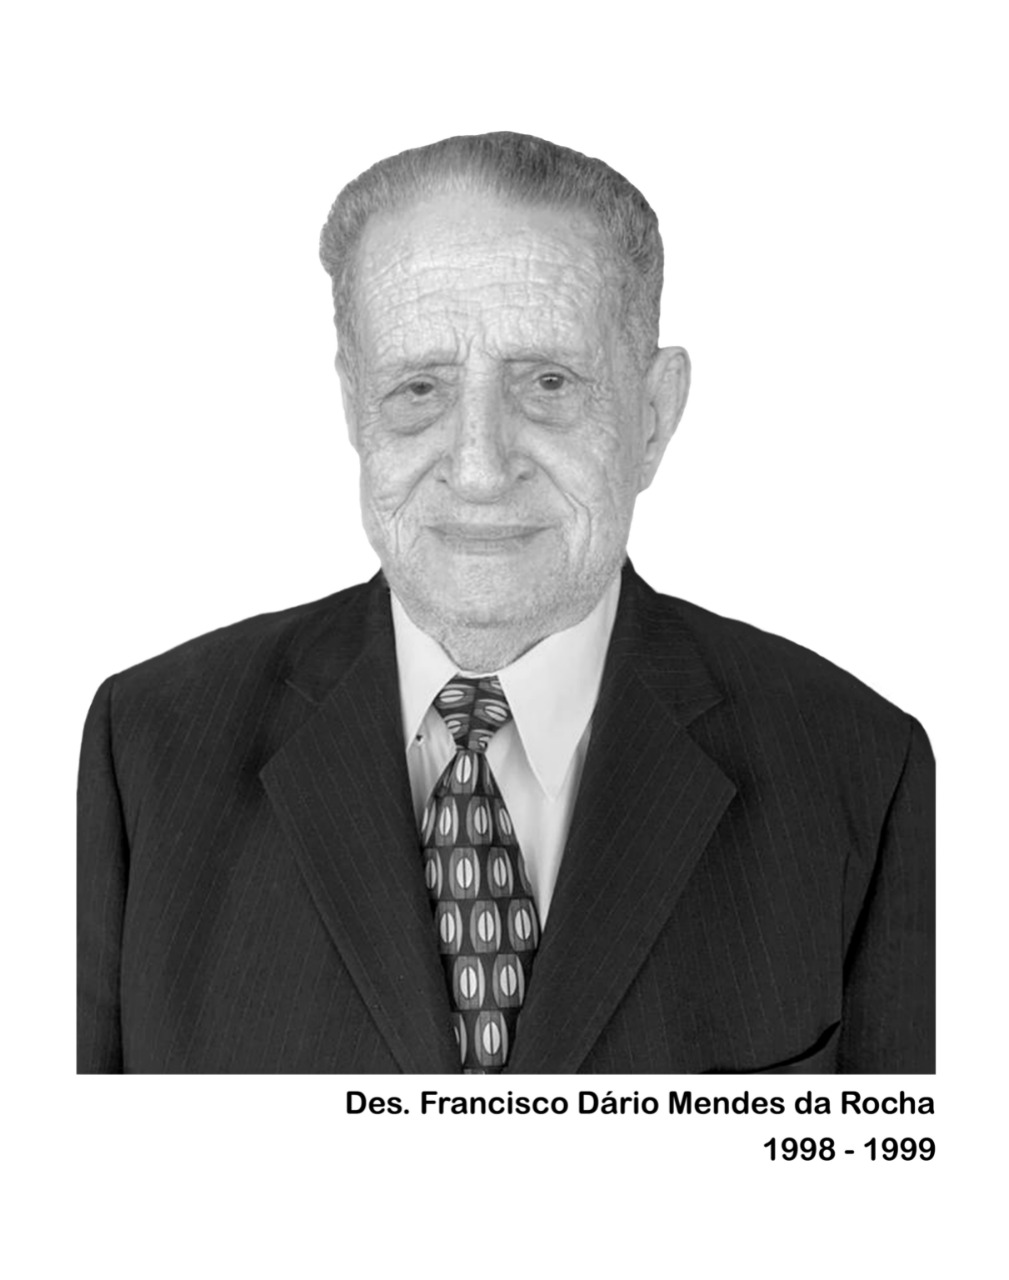 Francisco Dário Mendes da Rocha